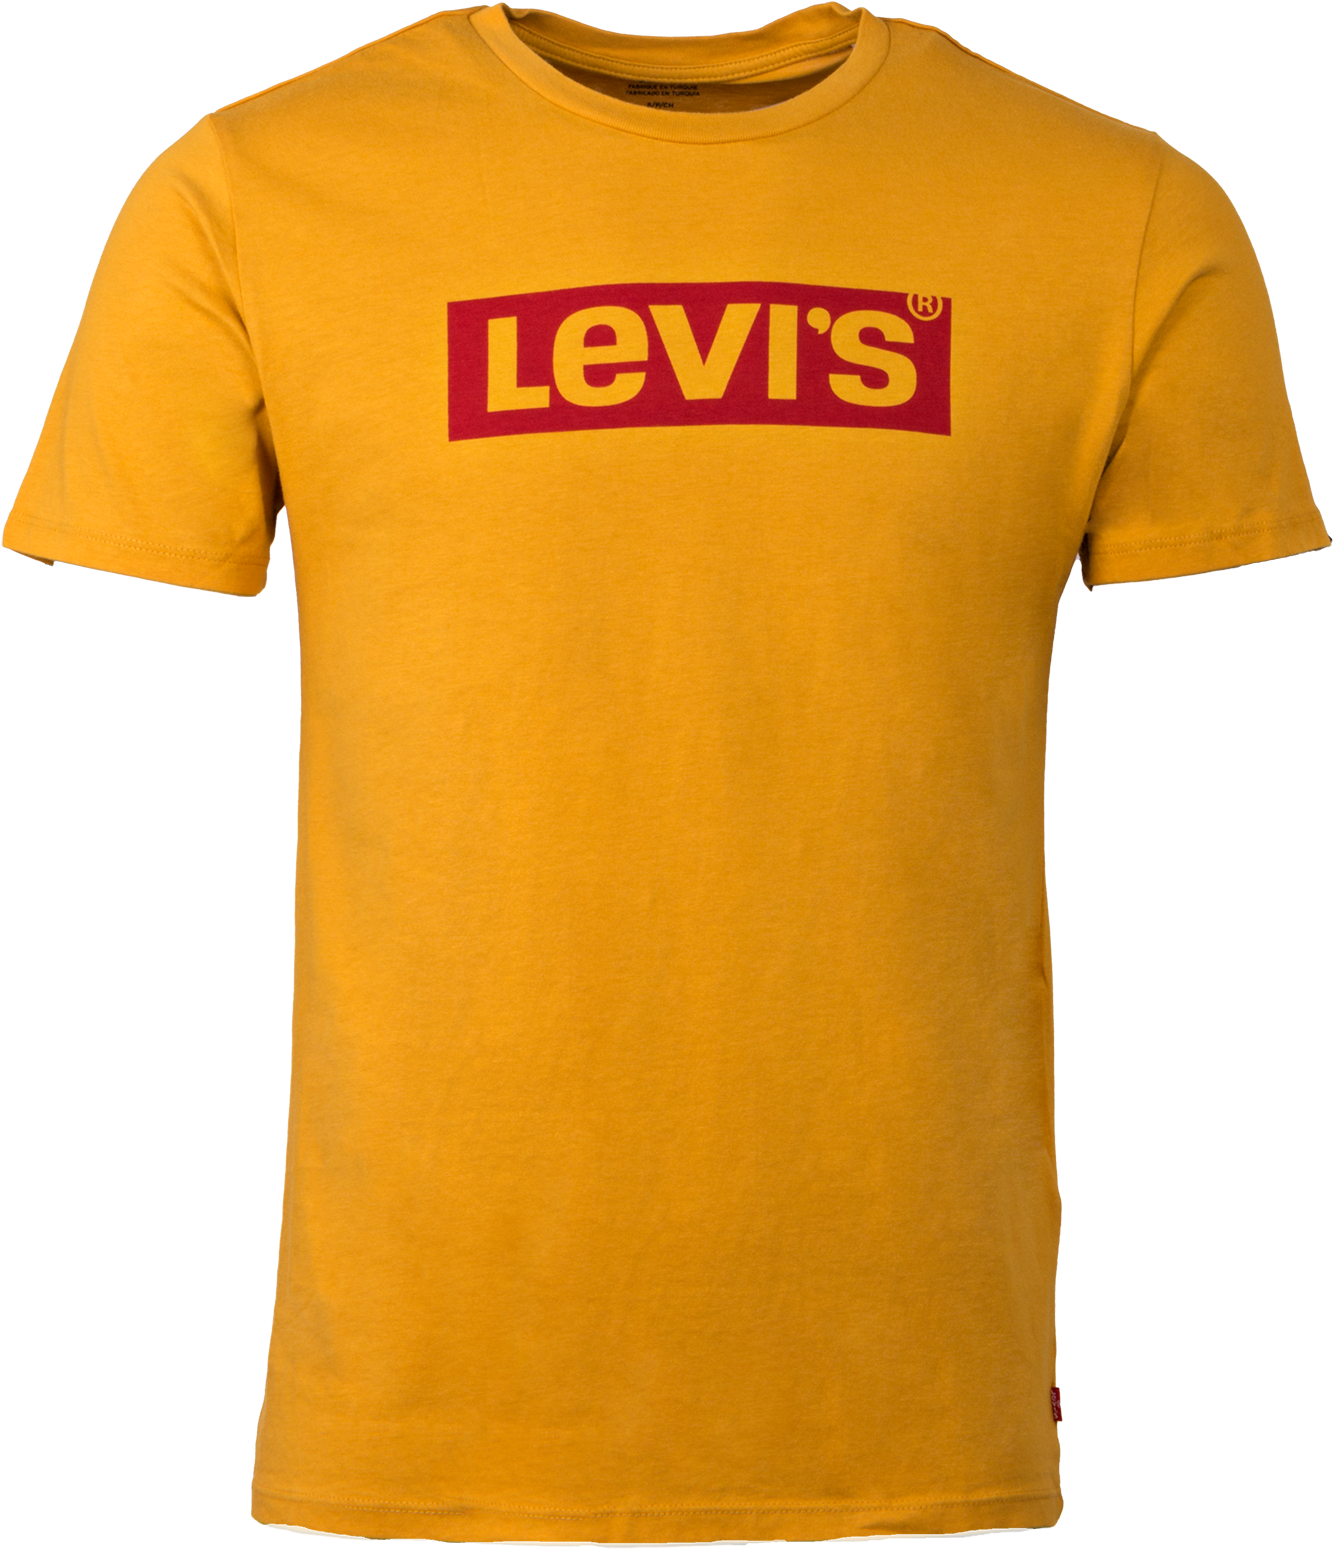 Levis Logoon Yellow T Shirt PNG